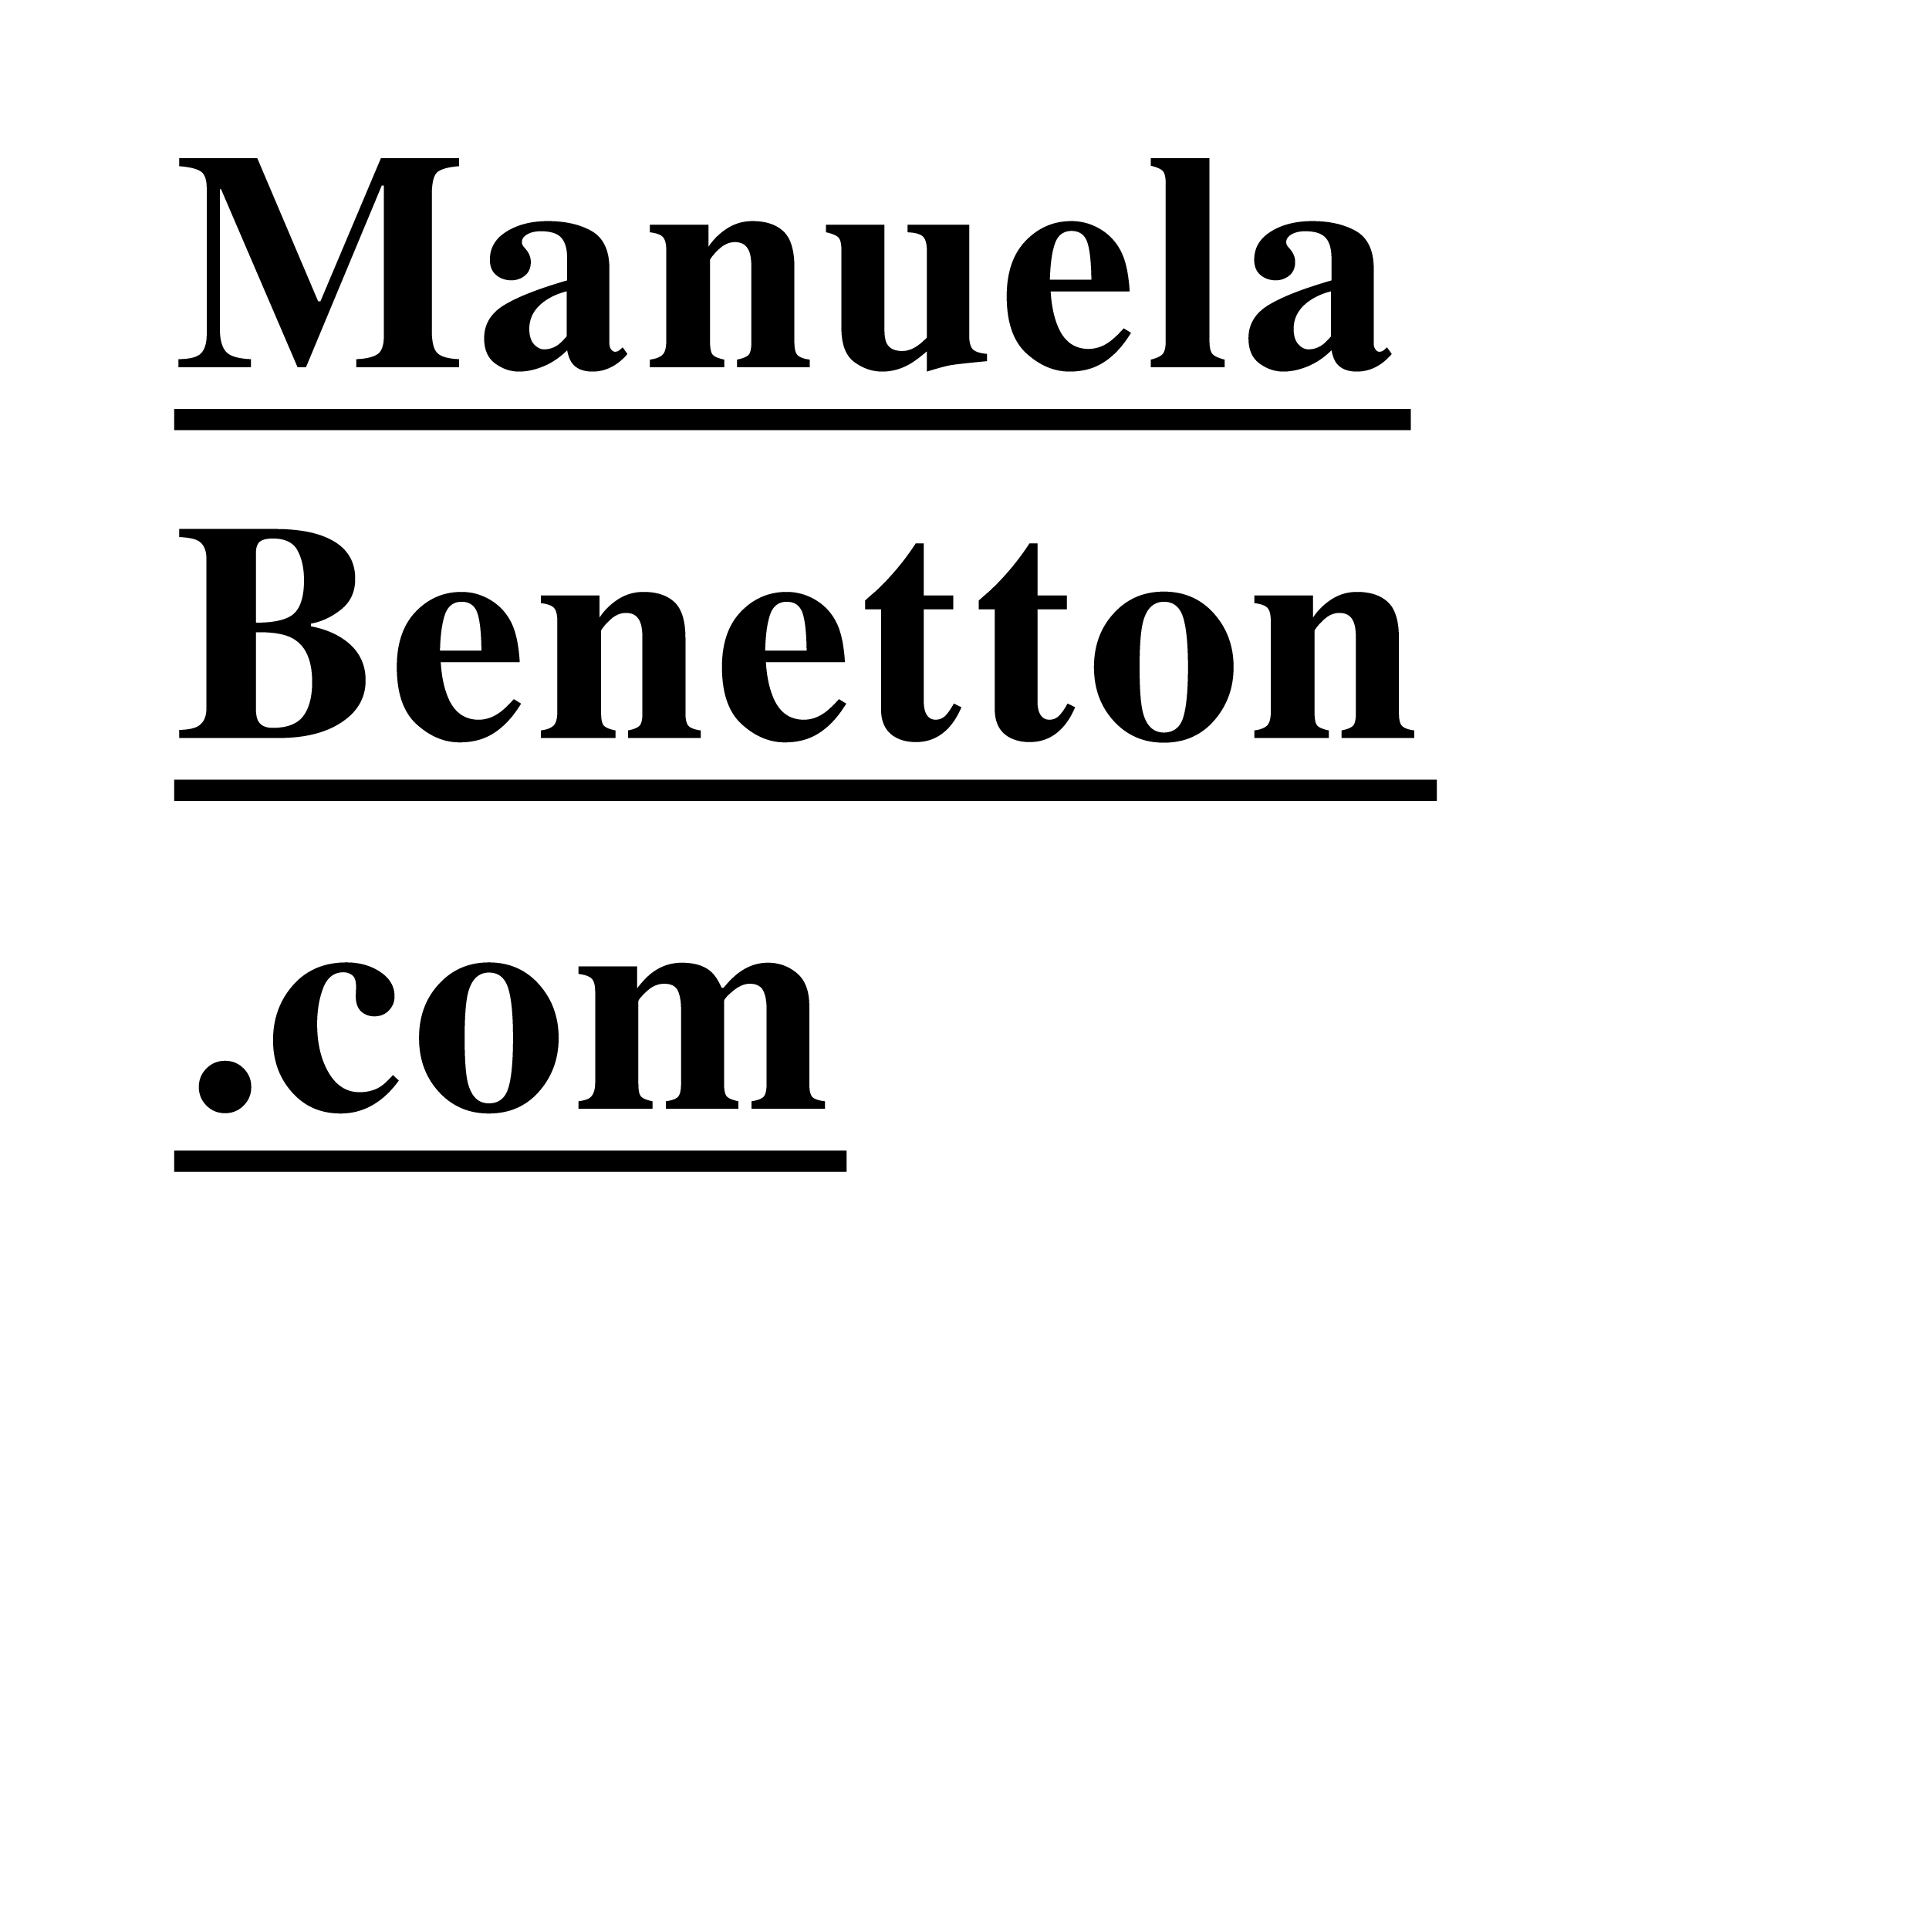 Manuela Benetton